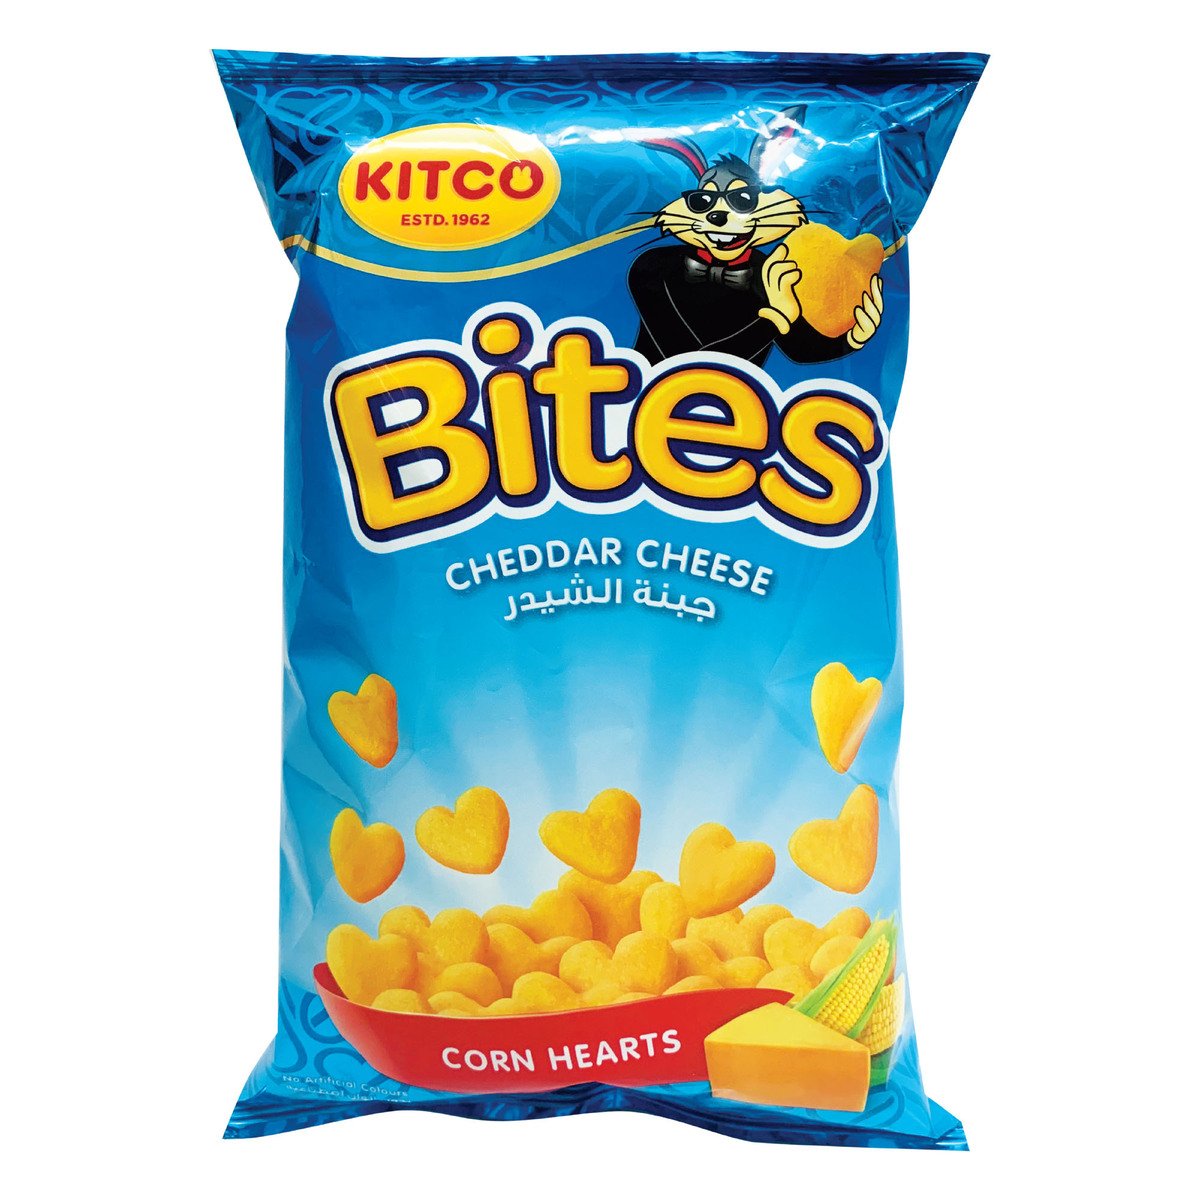 Kitco Bites Corn Hearts Cheese 90g Online At Best Price Corn Based Bags Lulu Ksa Price In 6120